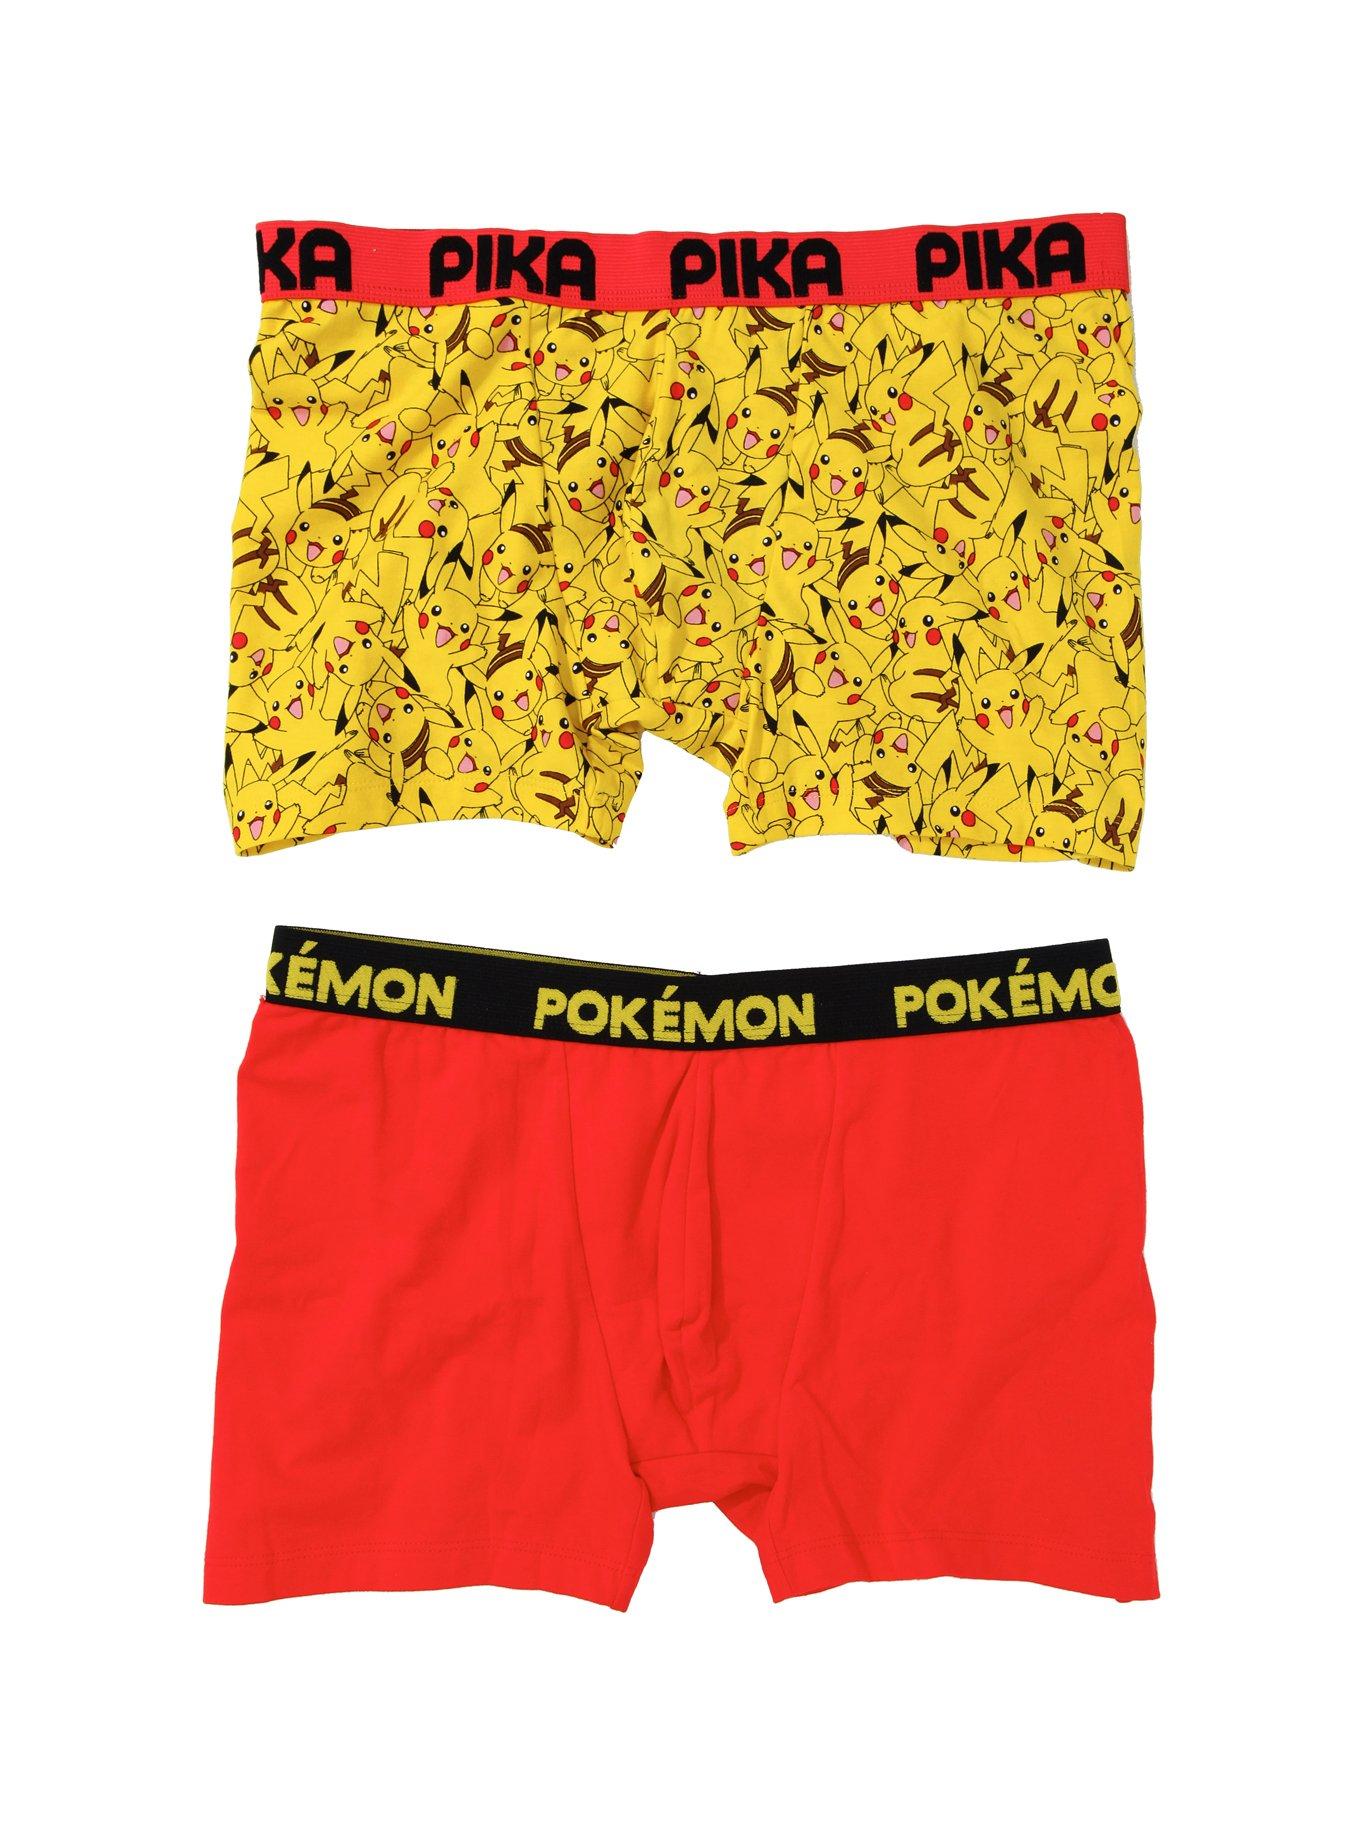 Pokemon Men's Underwear Boxer Brief Yellow Color Medium Size by